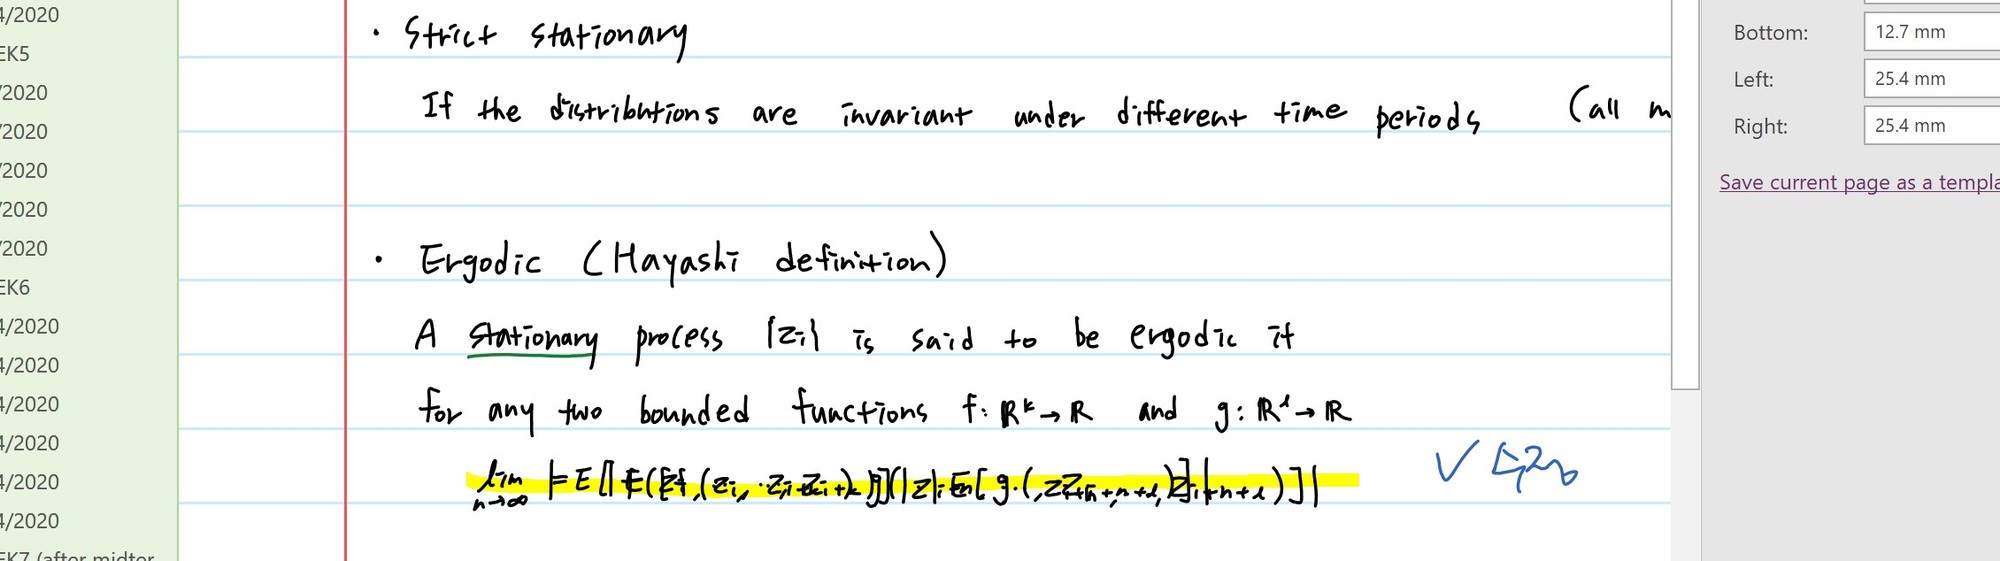 Onenote errors handwriting jumping + jittering problems ef5c72af-0df0-4dfc-a023-29428836e847?upload=true.jpg